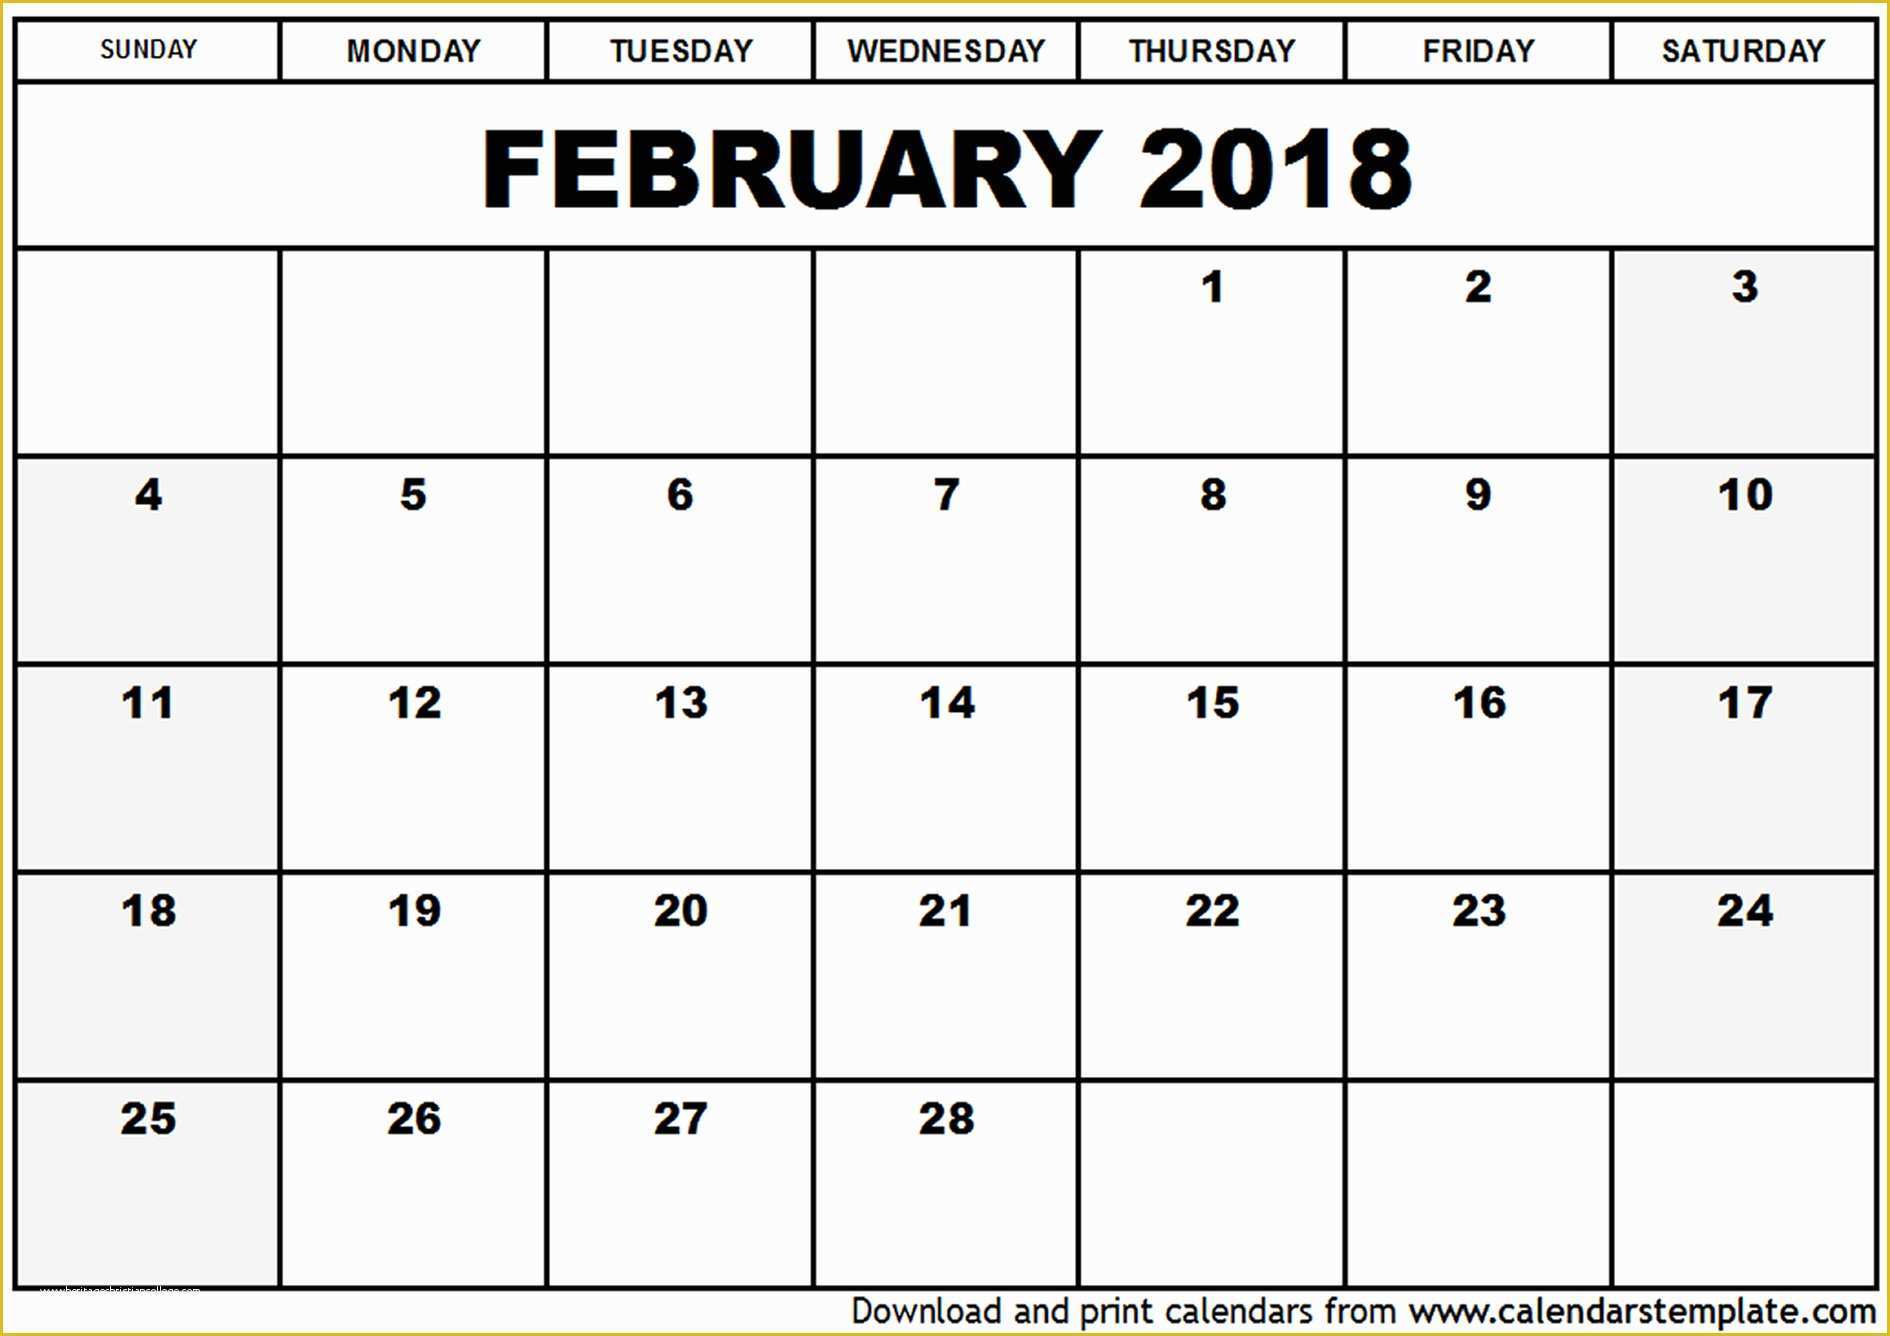 Free Downloadable Calendar Template Of February 2018 Calendar Template